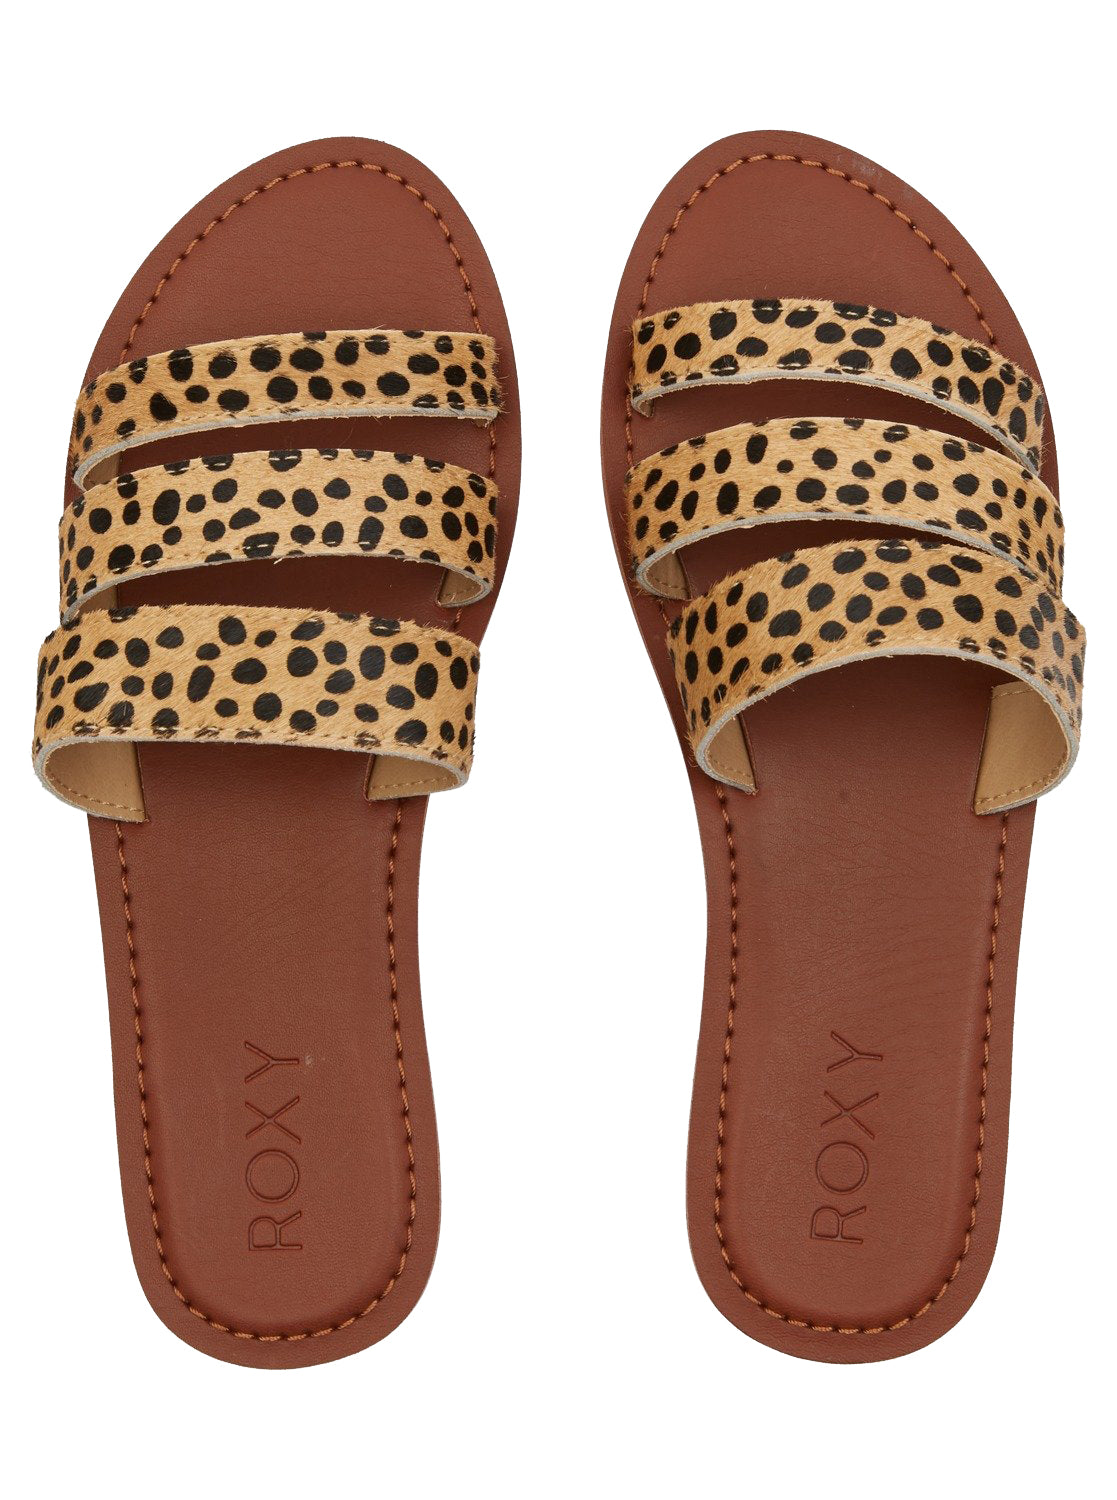 Roxy Wyld Rose 2 Womens Sandal CHE-Cheetah Print 10